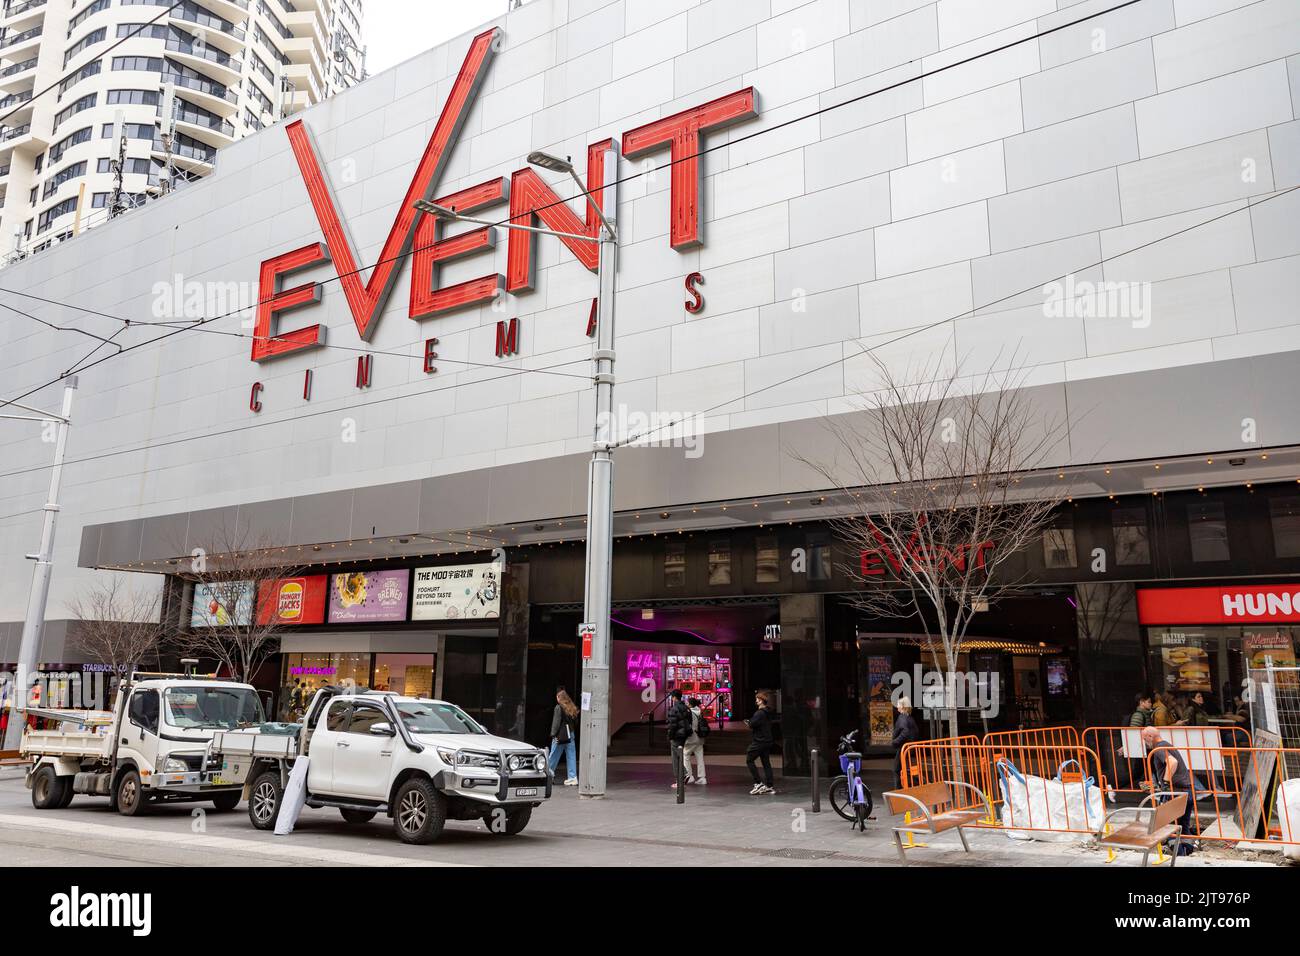 Event film Cinemas building in George street,Sydney city centre,NSW,Australia Stock Photo